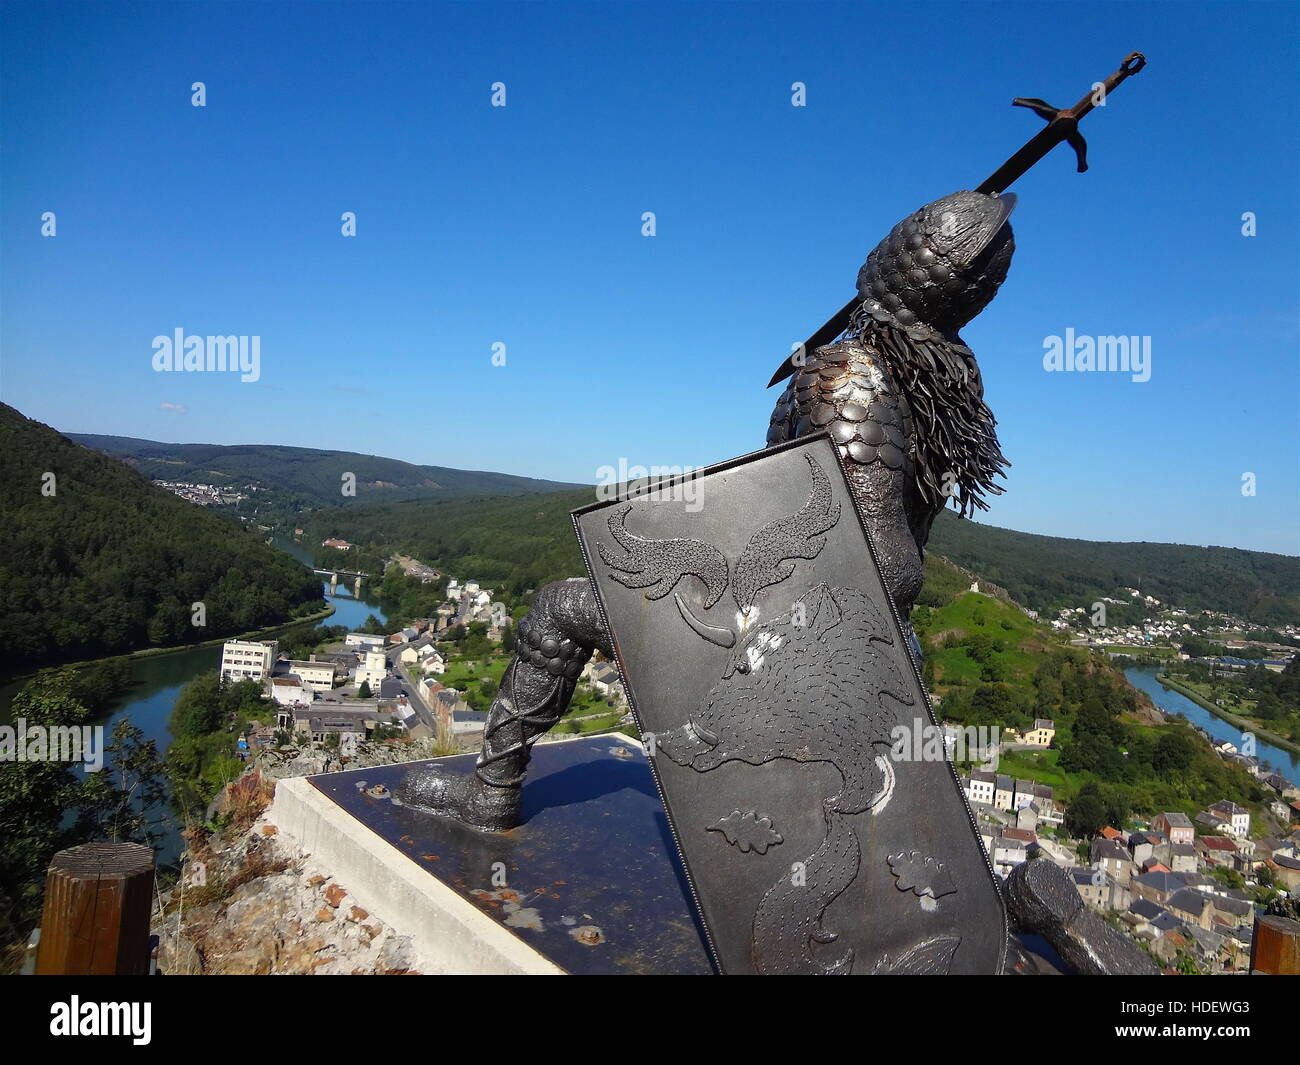 Dardennor, sculpture in the hilltops of Bogny-sur-Meuse, France. Rocher de l'Hermitage. Stock Photo